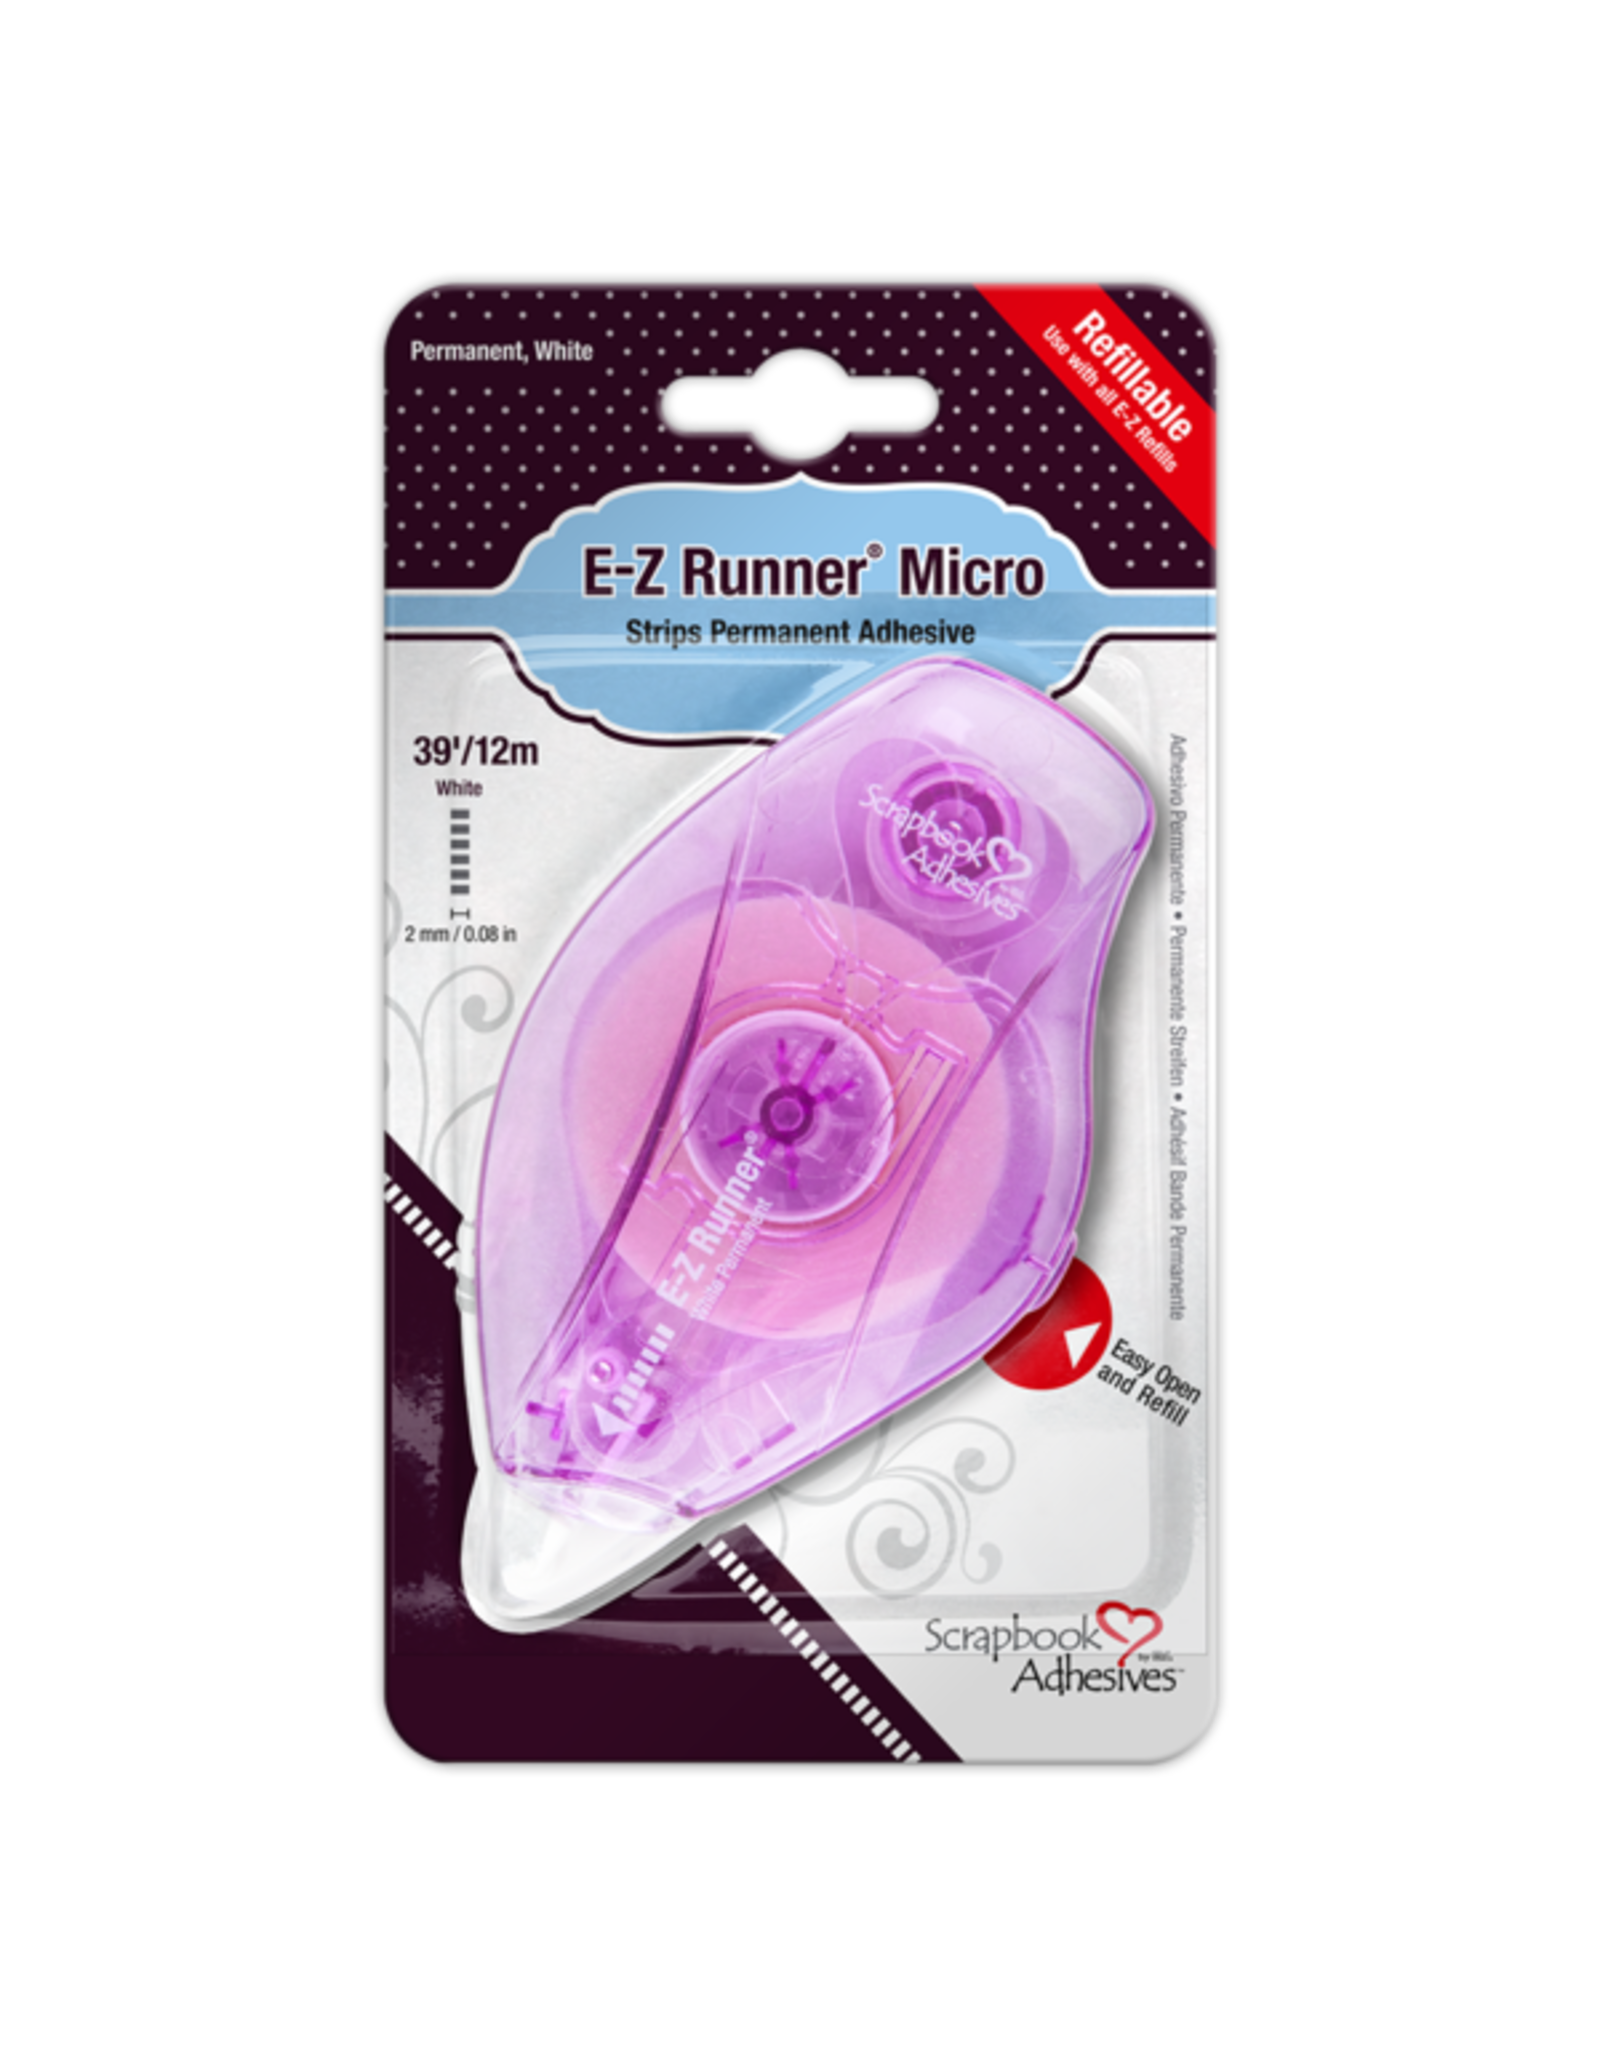 Scrapbook Adhesives E-Z Runner Micro Refillable Dispenser-small purple